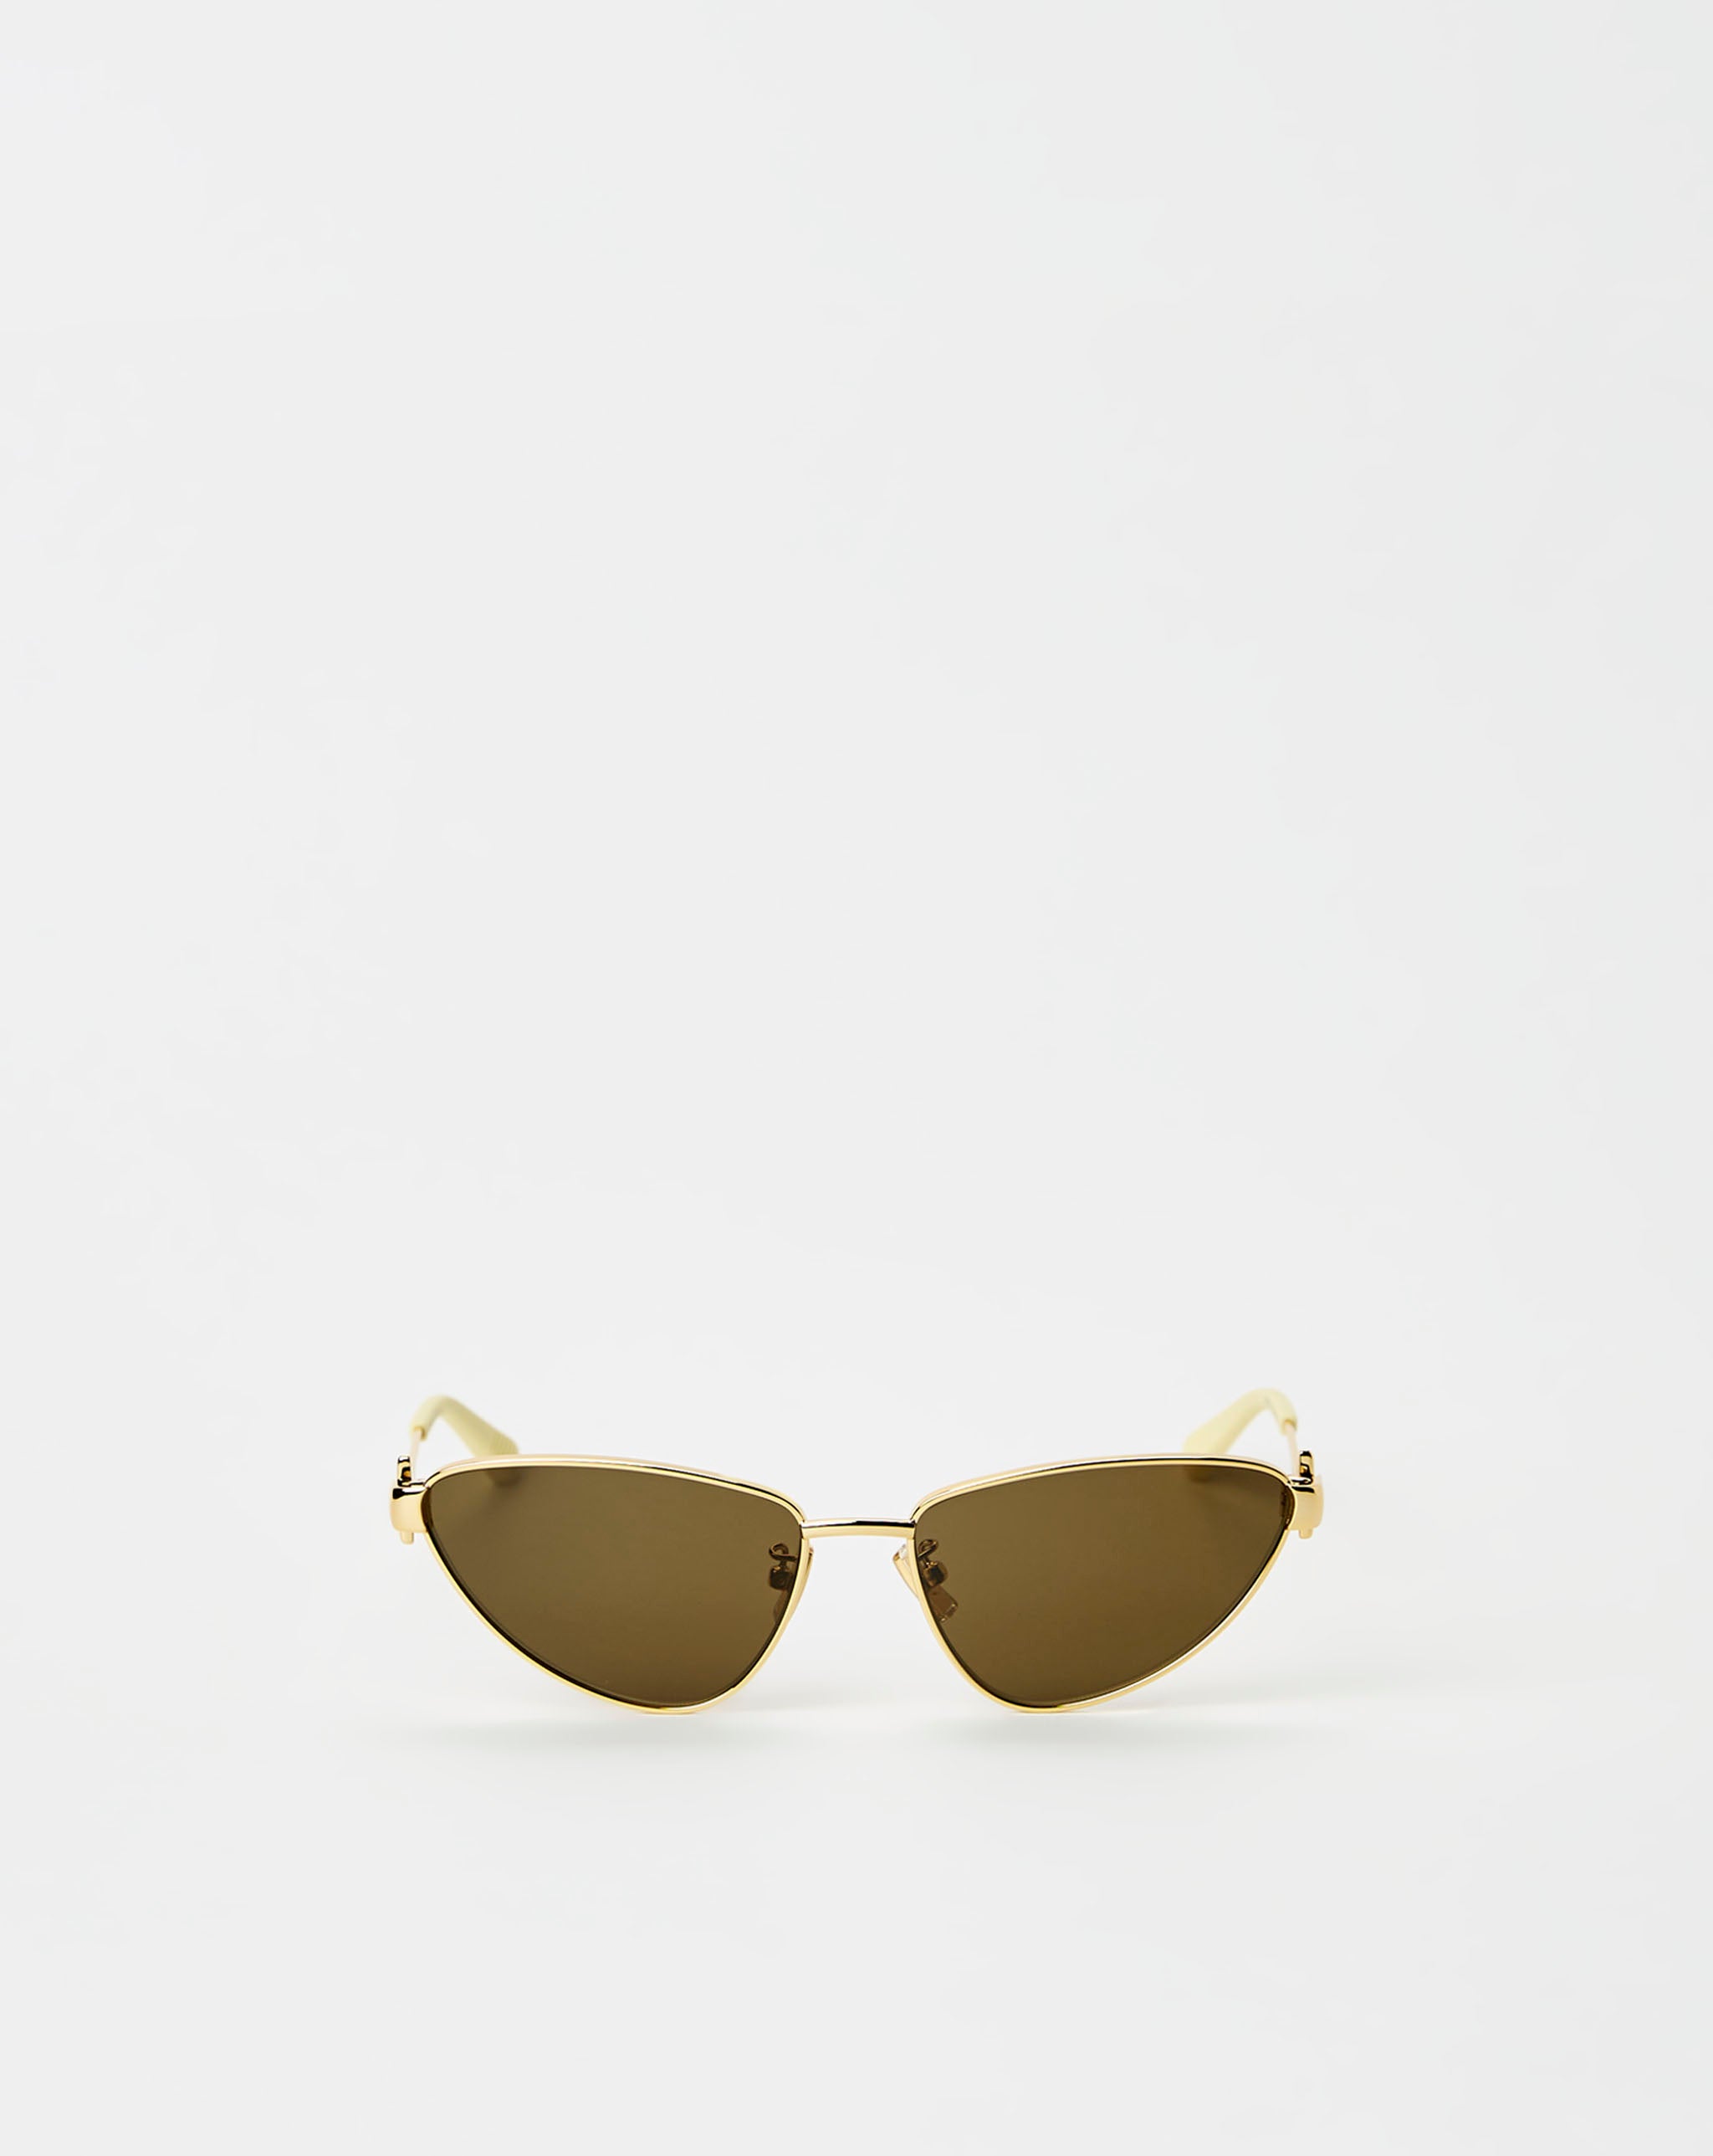 Bottega Veneta Turn Cat Eye Sunglasses  - XHIBITION